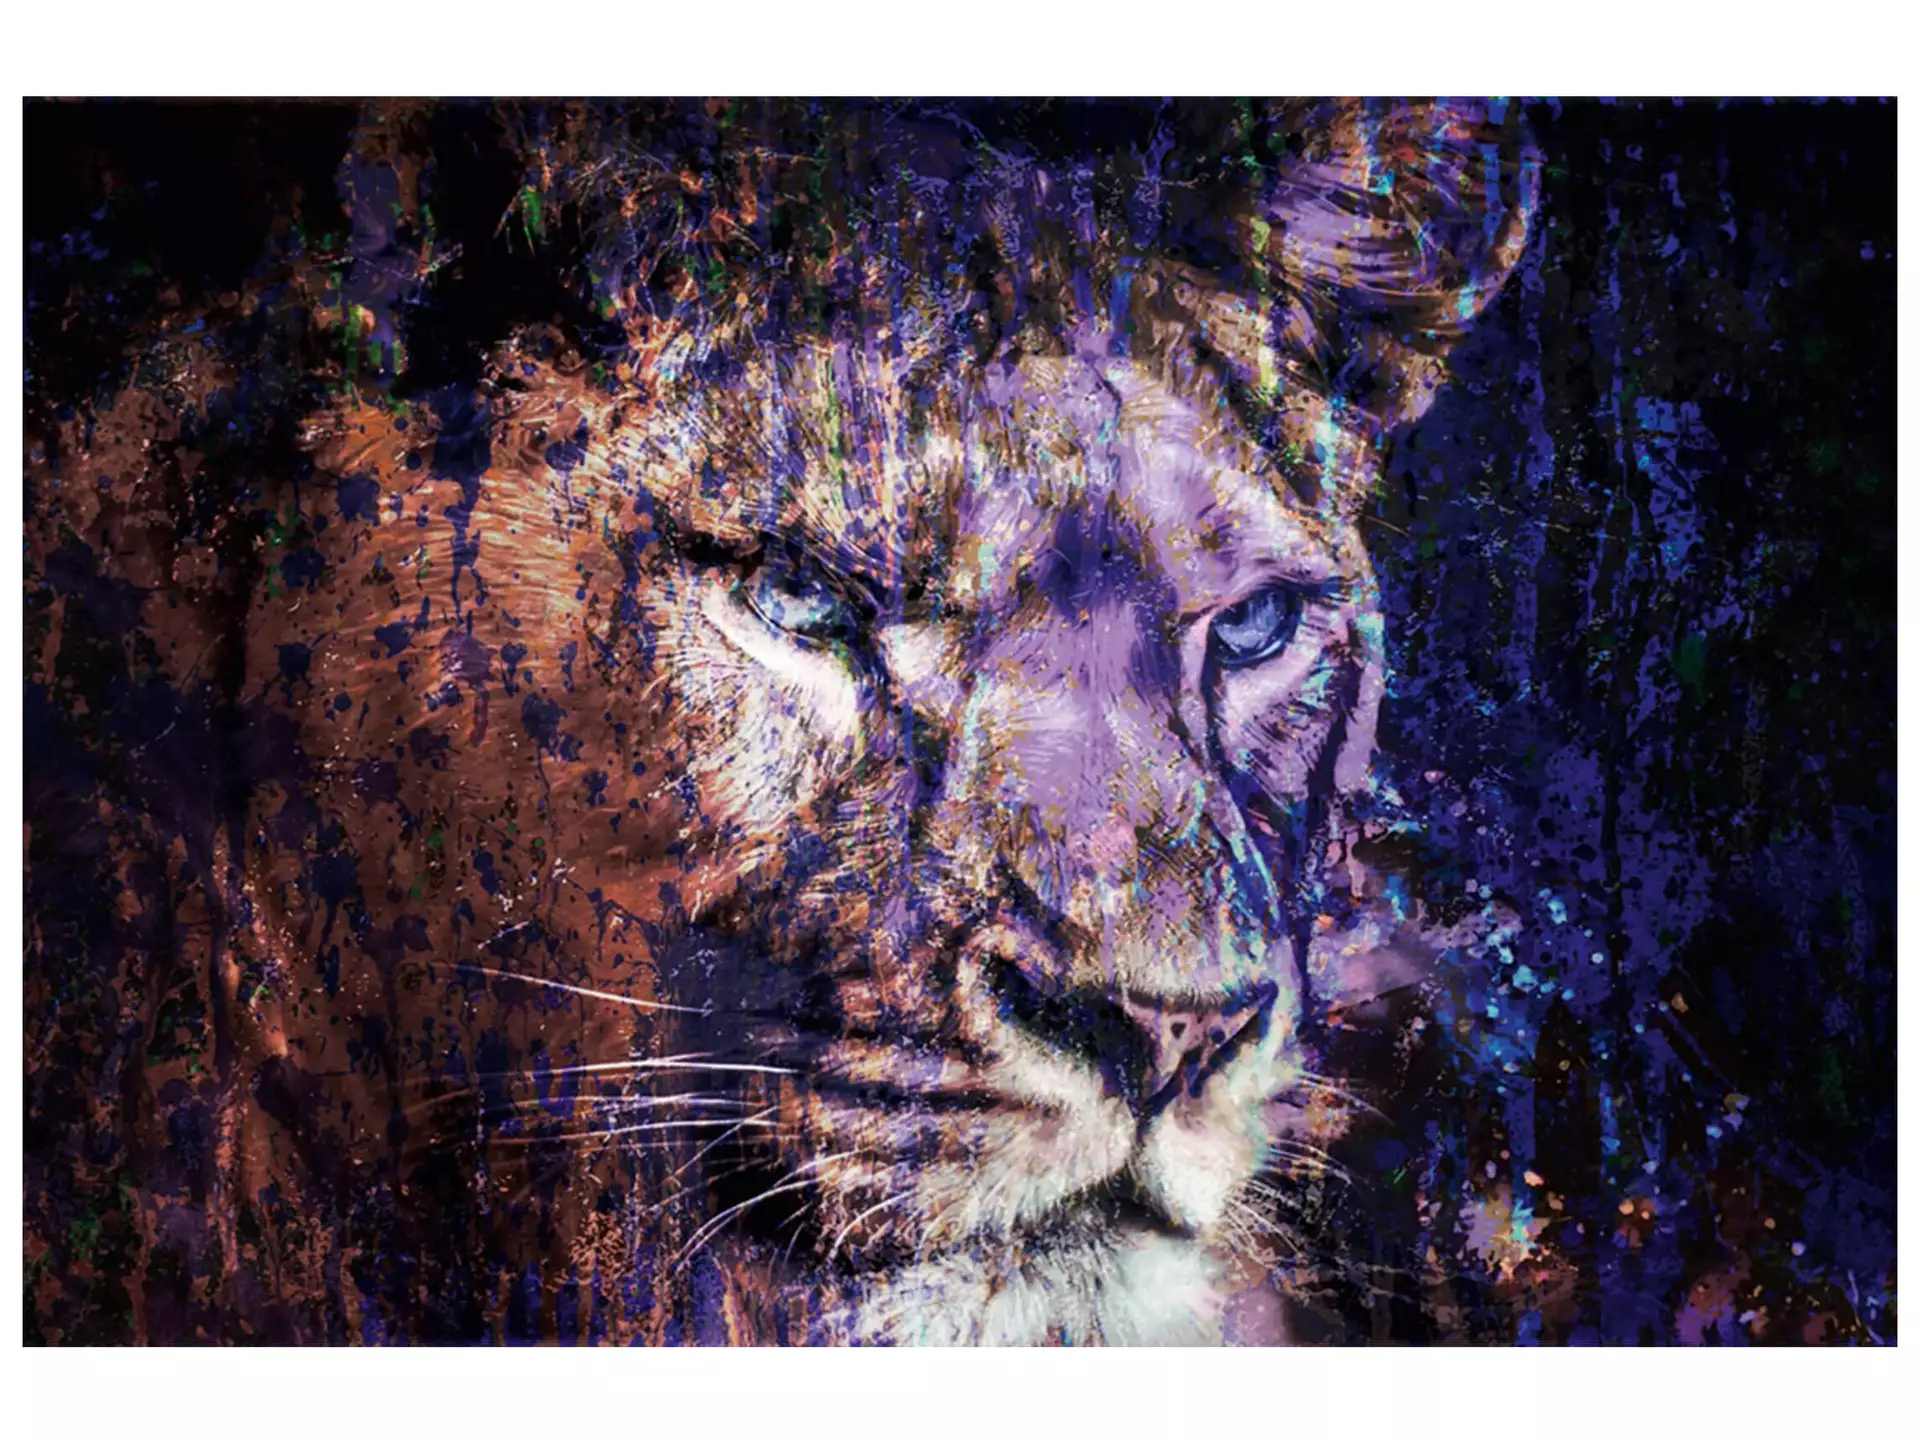 Digitaldruck auf Acrylglas Löwe in Blau image LAND / Grösse: 120 x 80 cm